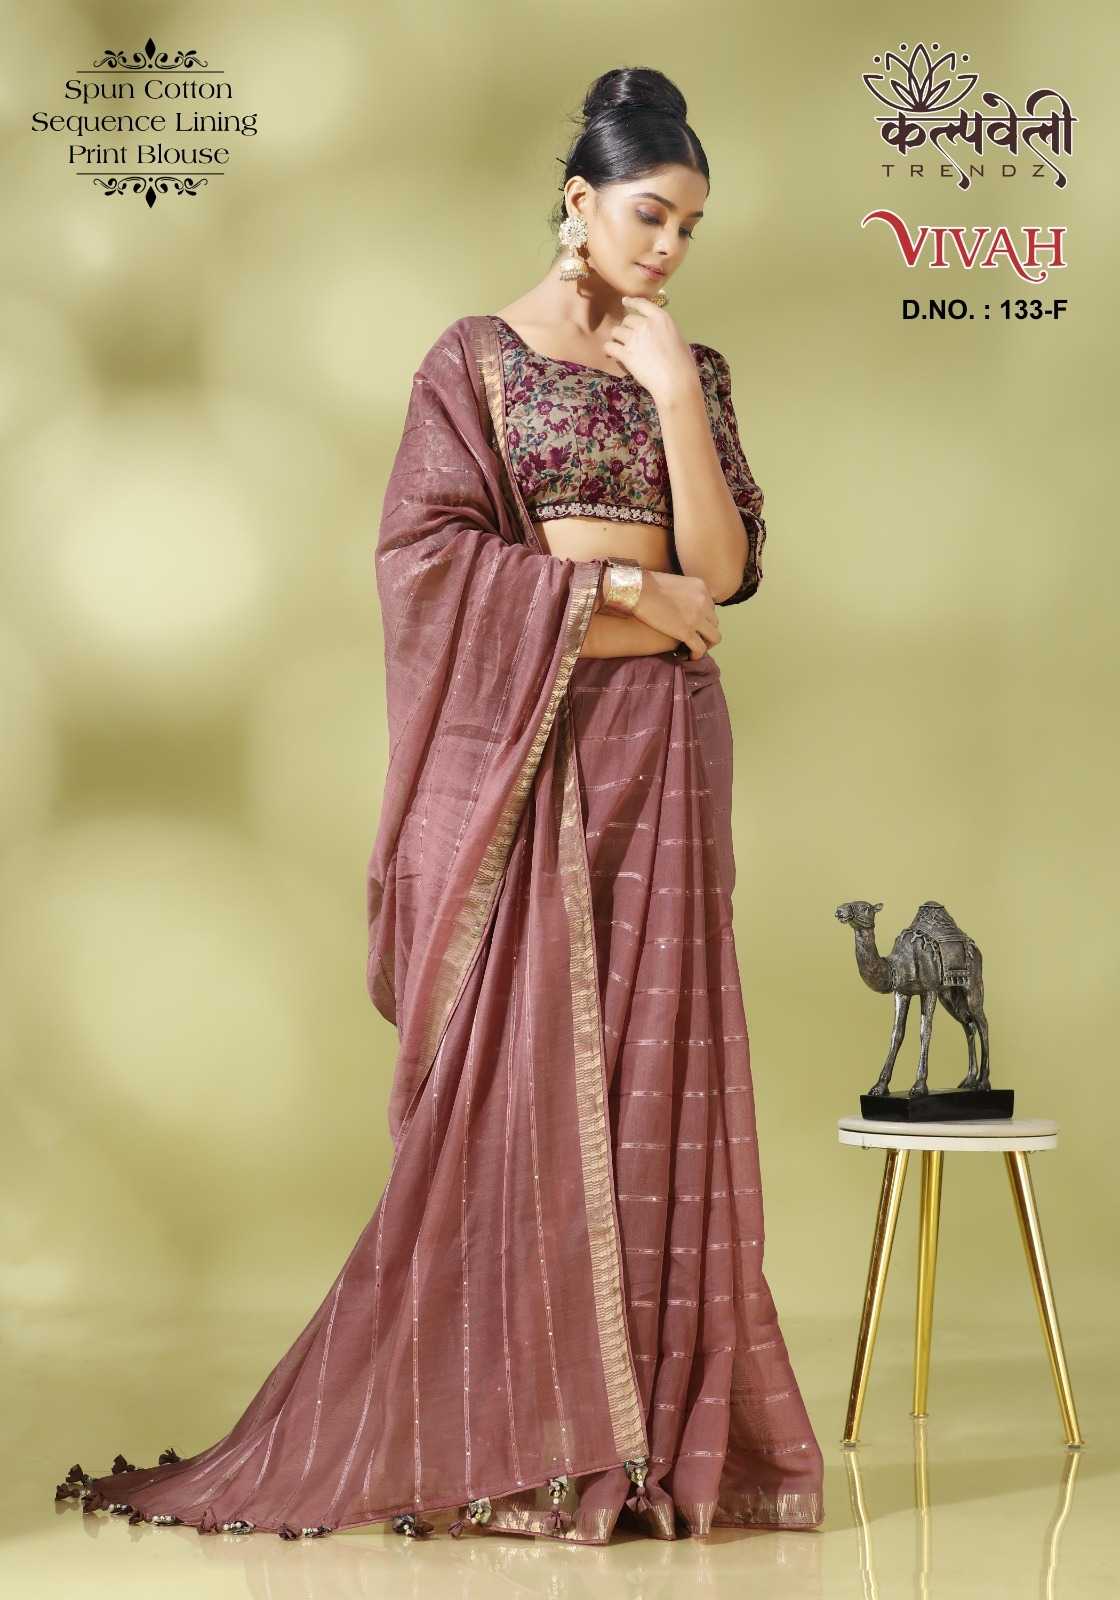 kalpavelly trendz vivah 133 fancy sequence lining spun cotton sarees